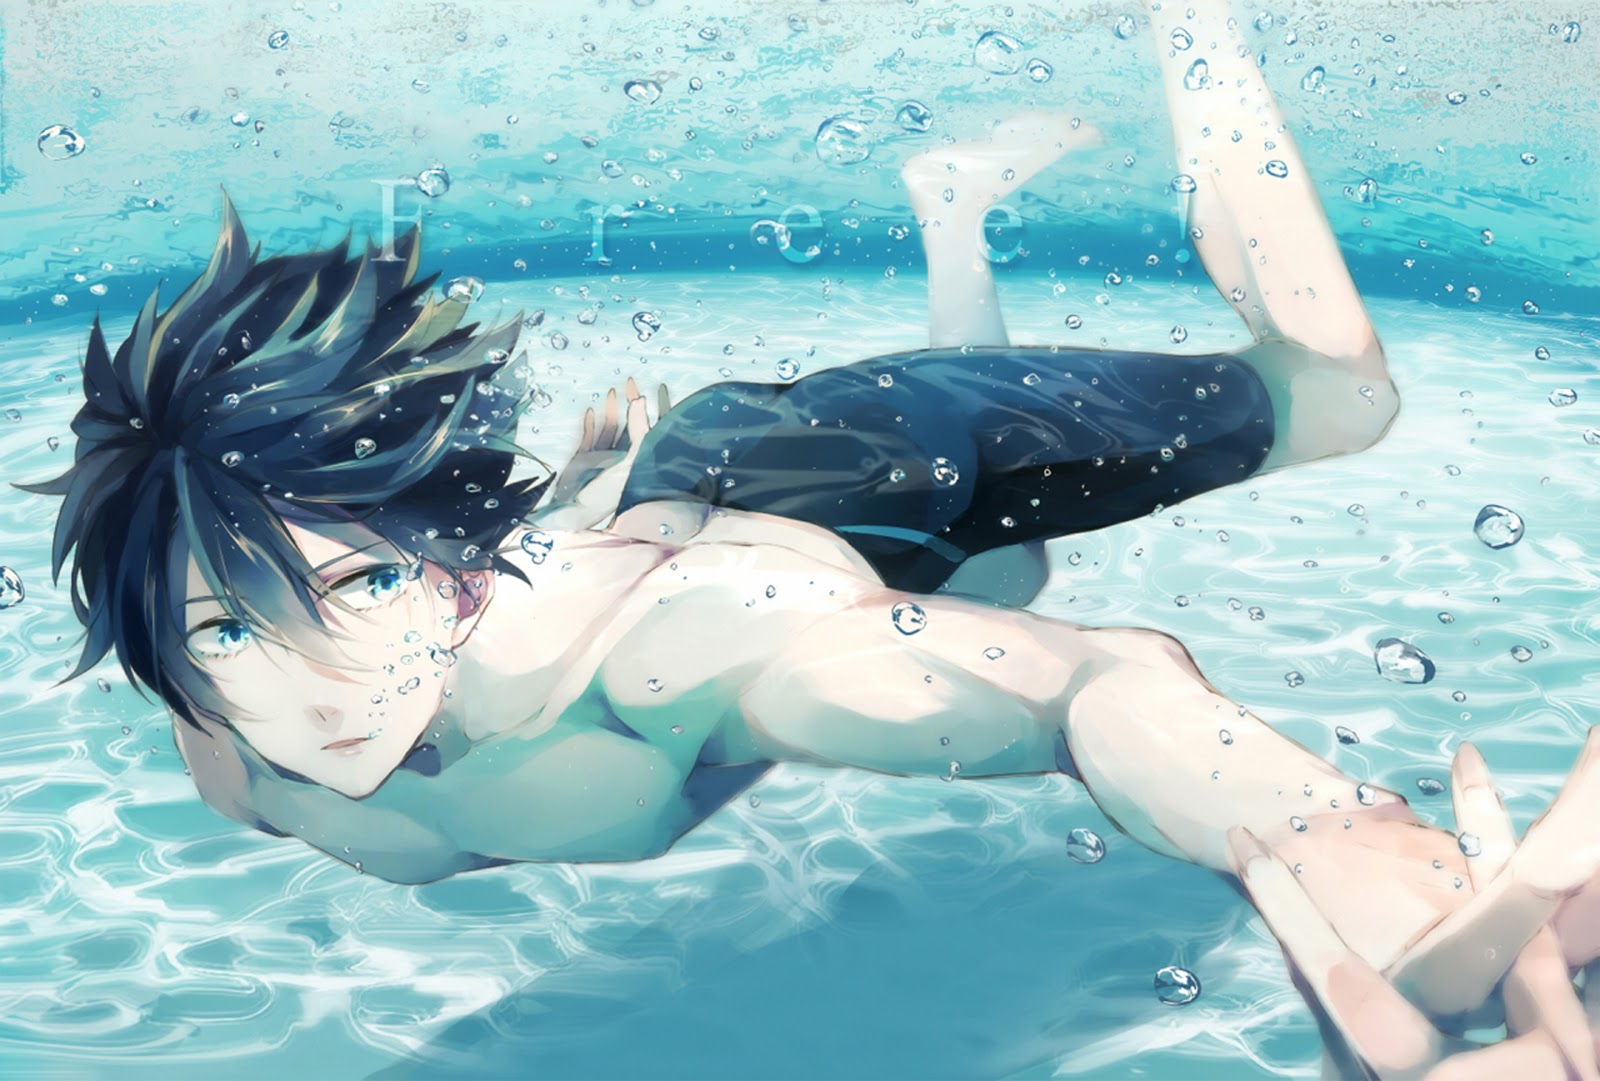  Anime Boy Swimming 2020 HD Wallpaper 1600x1081